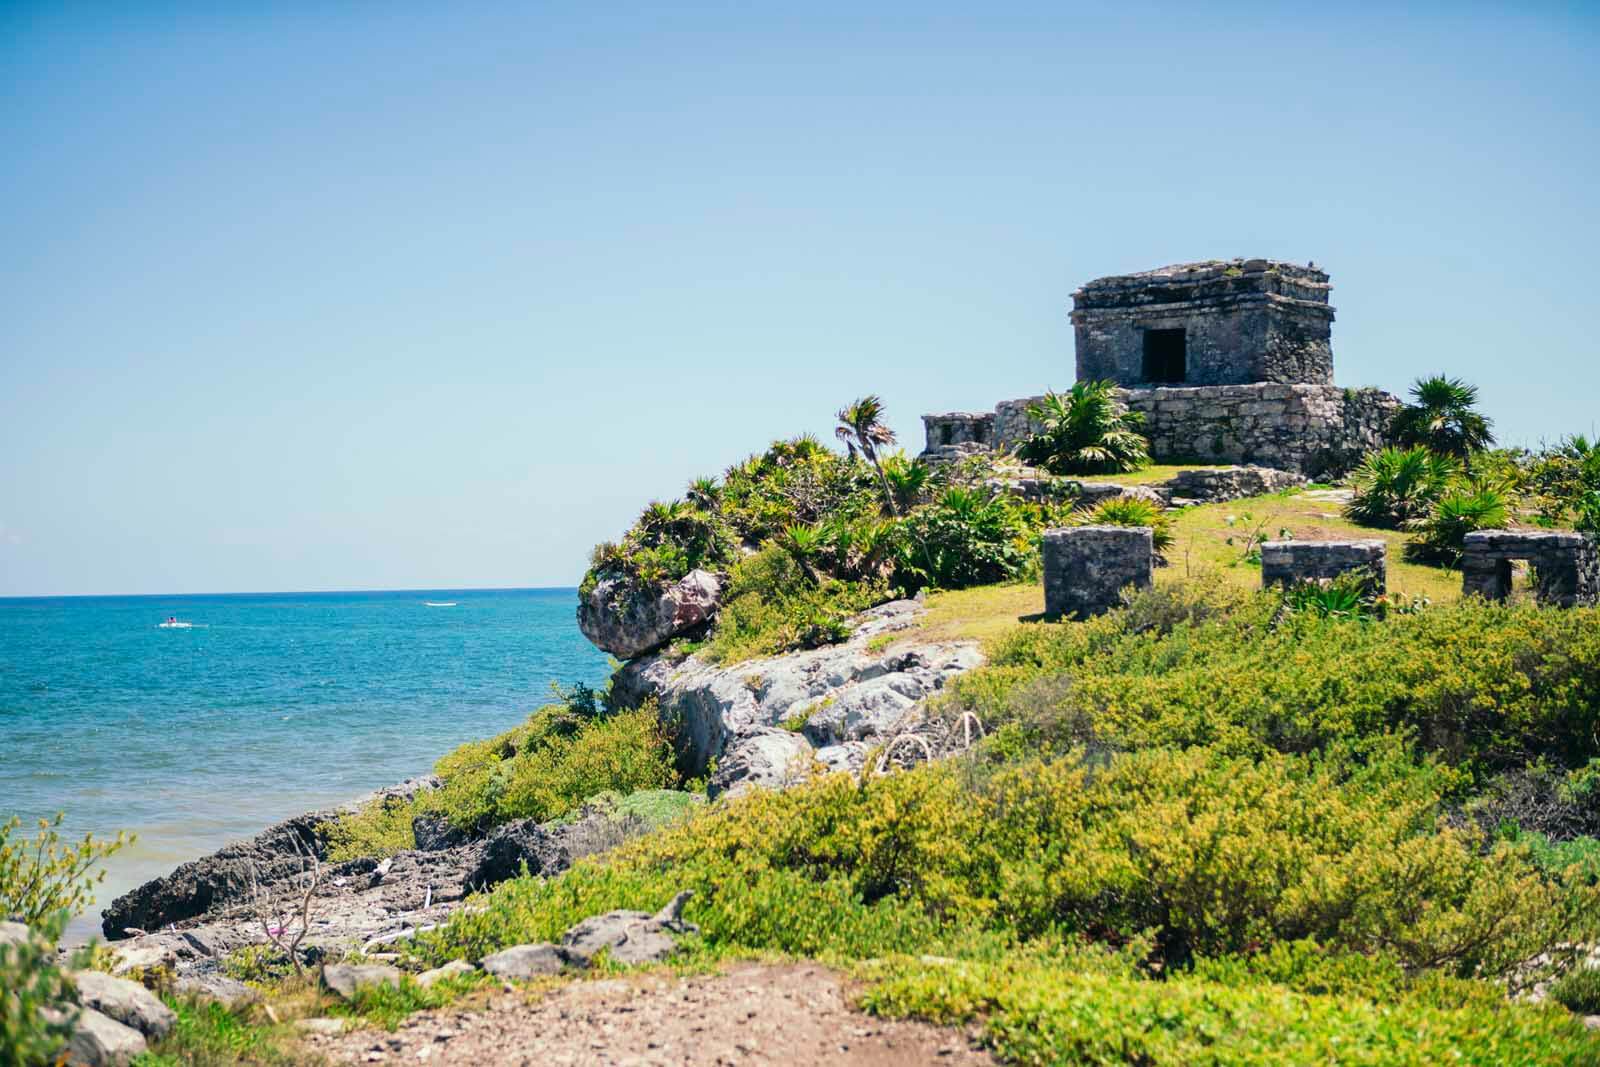 Tulum Ruins overlooking the beach